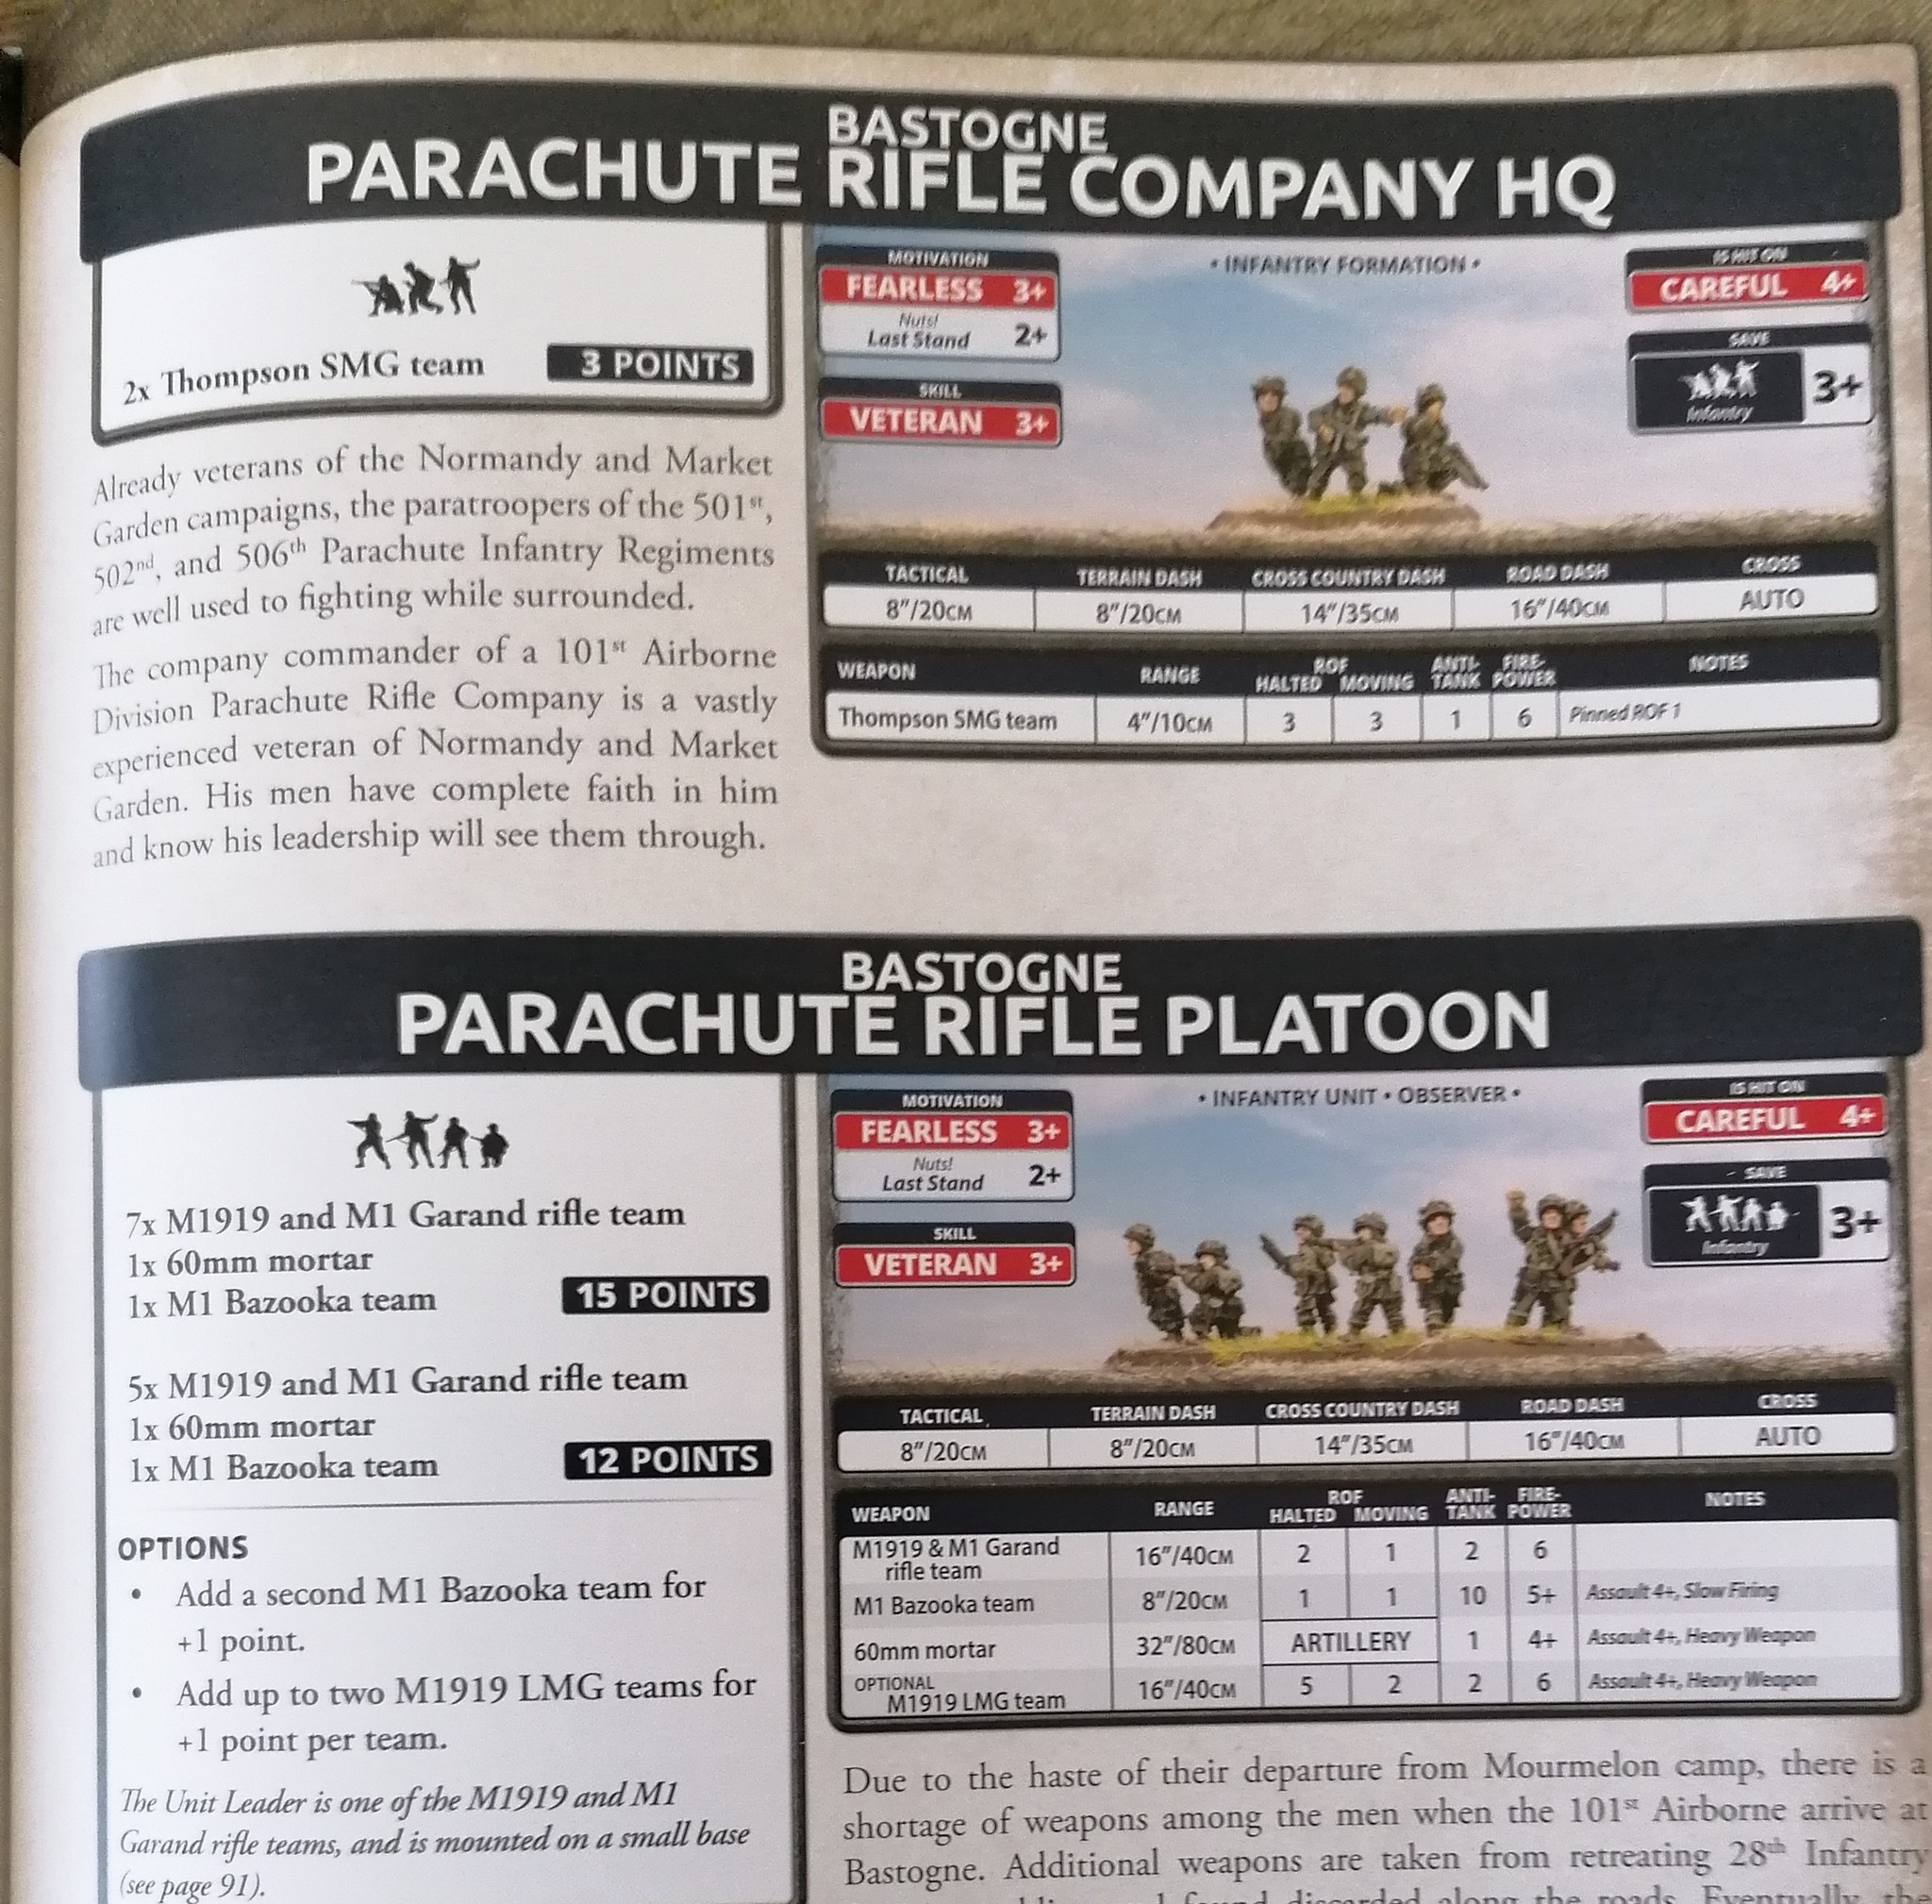 Parachute Rifle Platoon stats